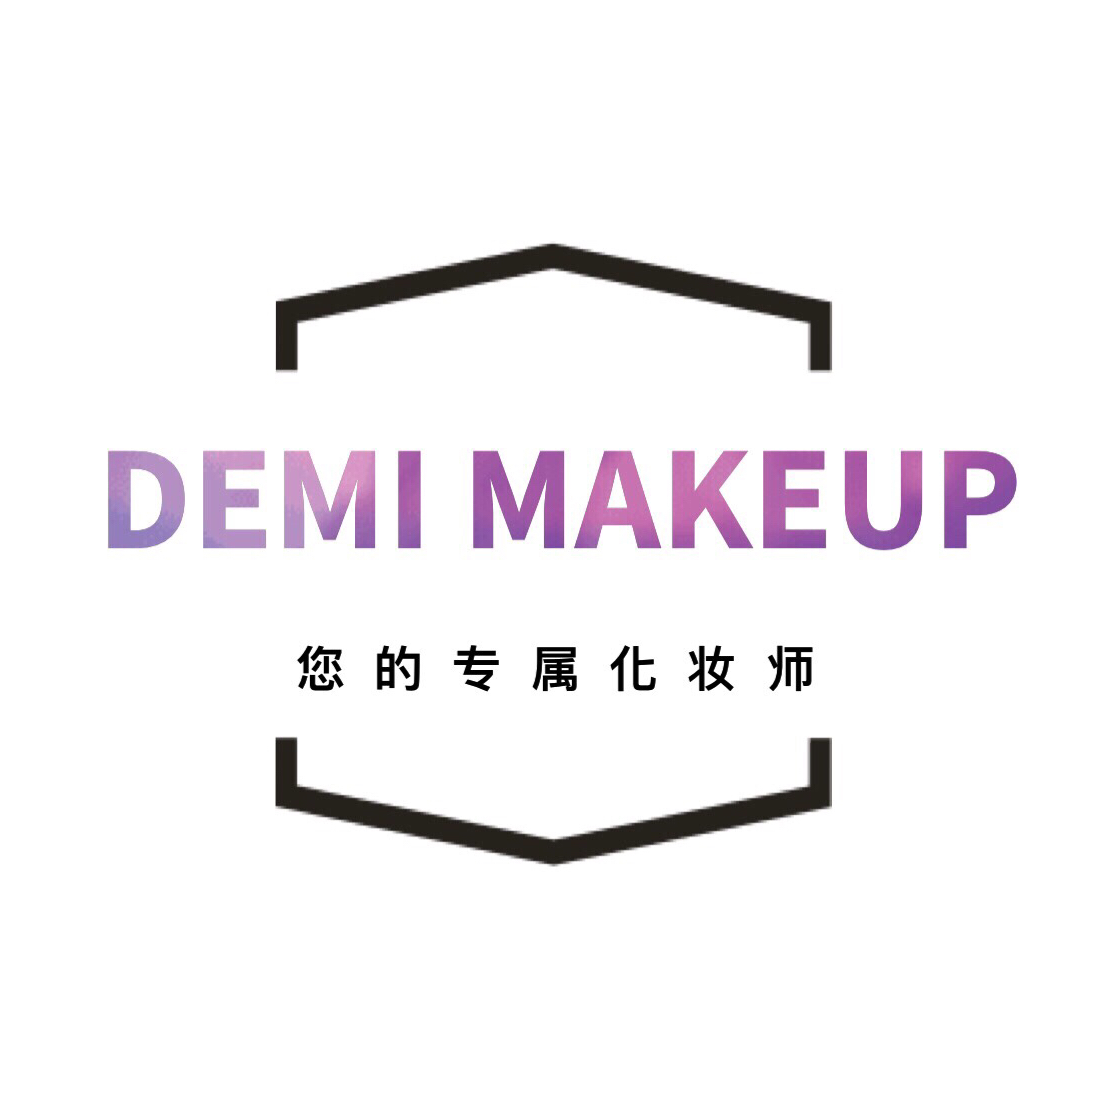 Demi Makeup